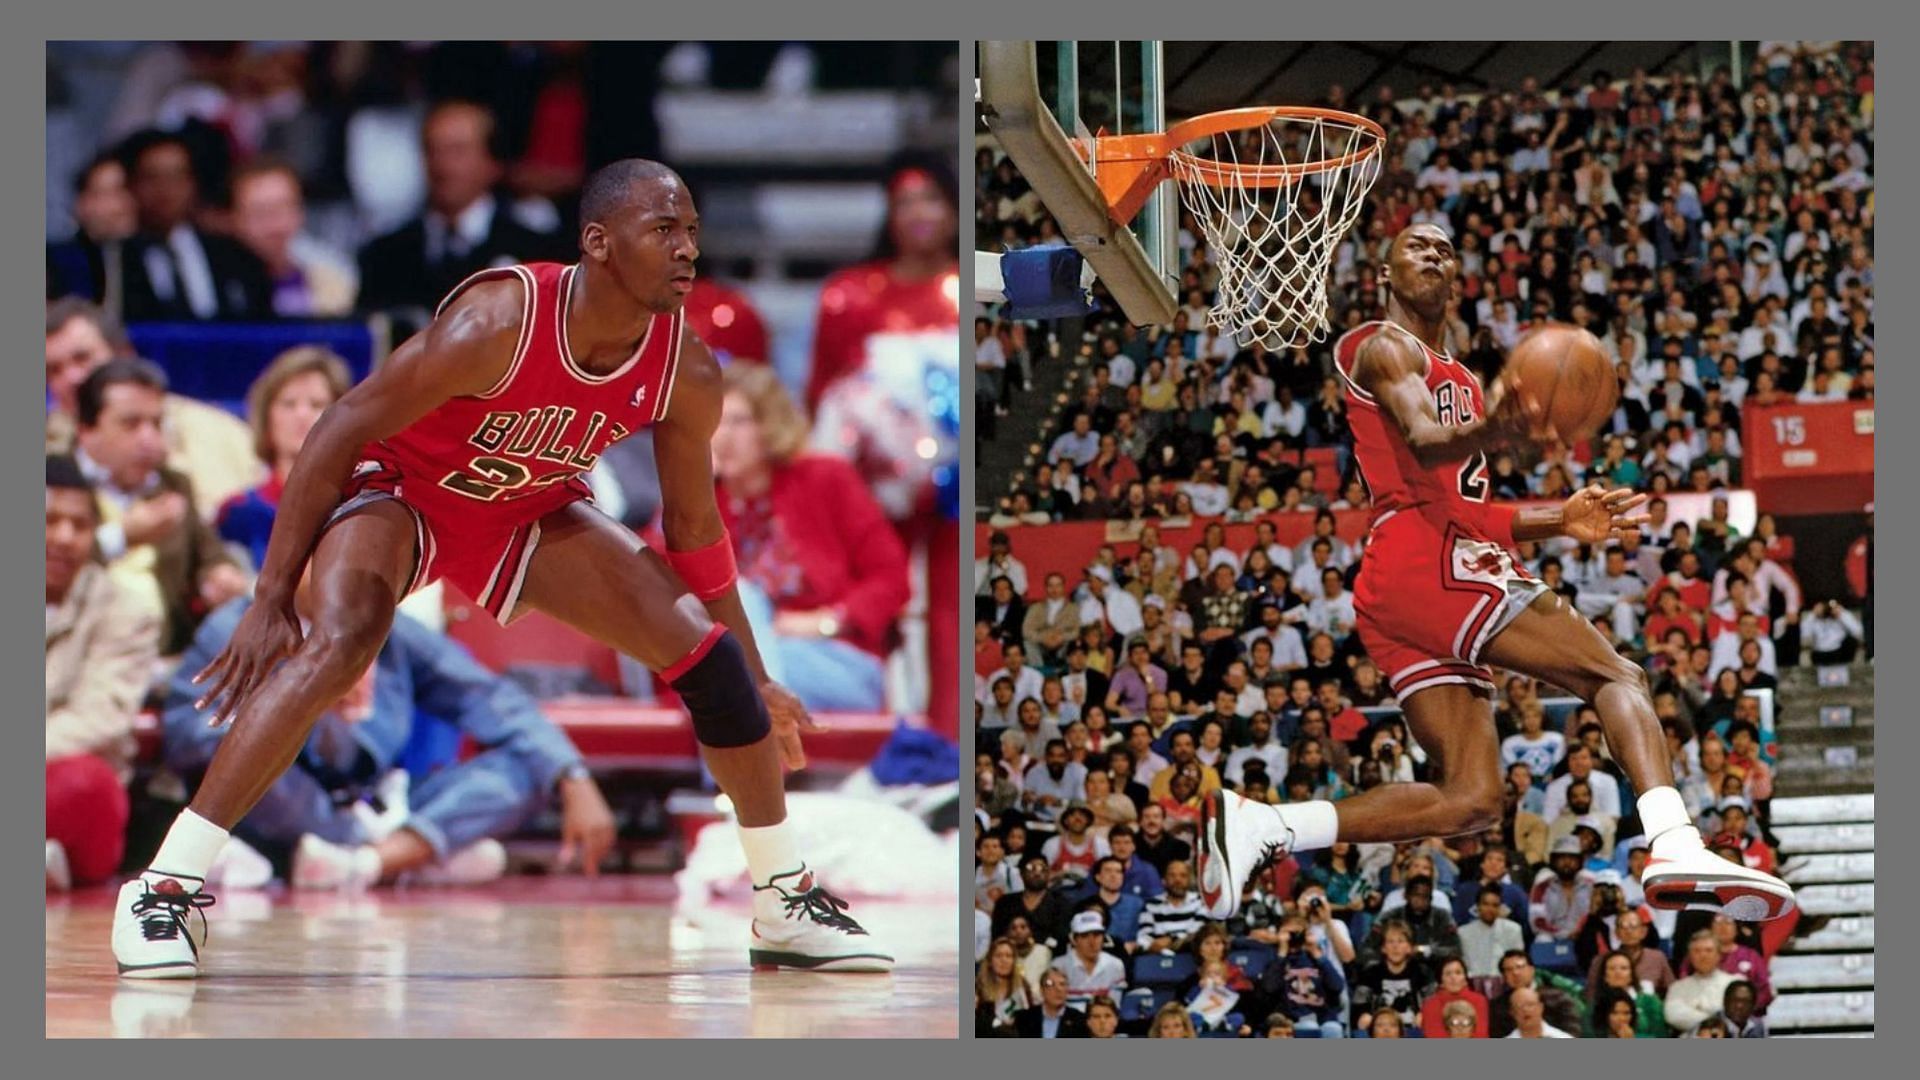 Michael Jordan sporting the OG Air Jordan 2 White/Red colorway during his 1986 game (Image via Twitter/@fullress)